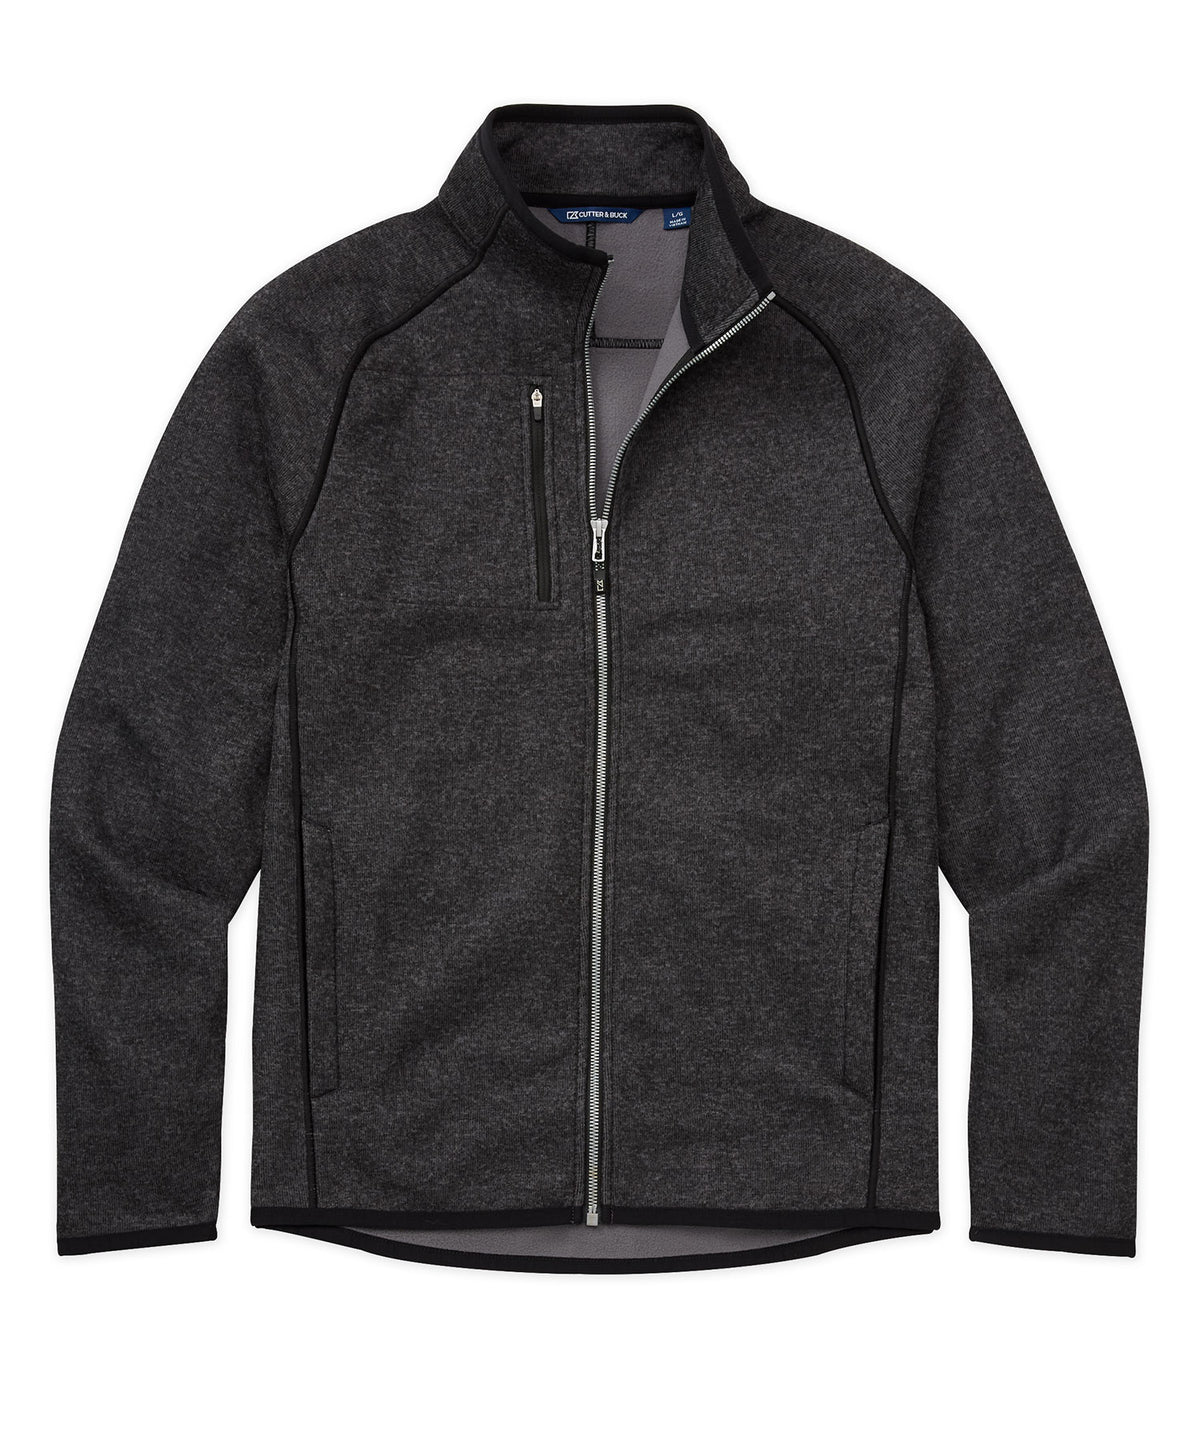 Cutter & Buck Mainsail Sweater-Knit Full Zip Jacket, Big & Tall